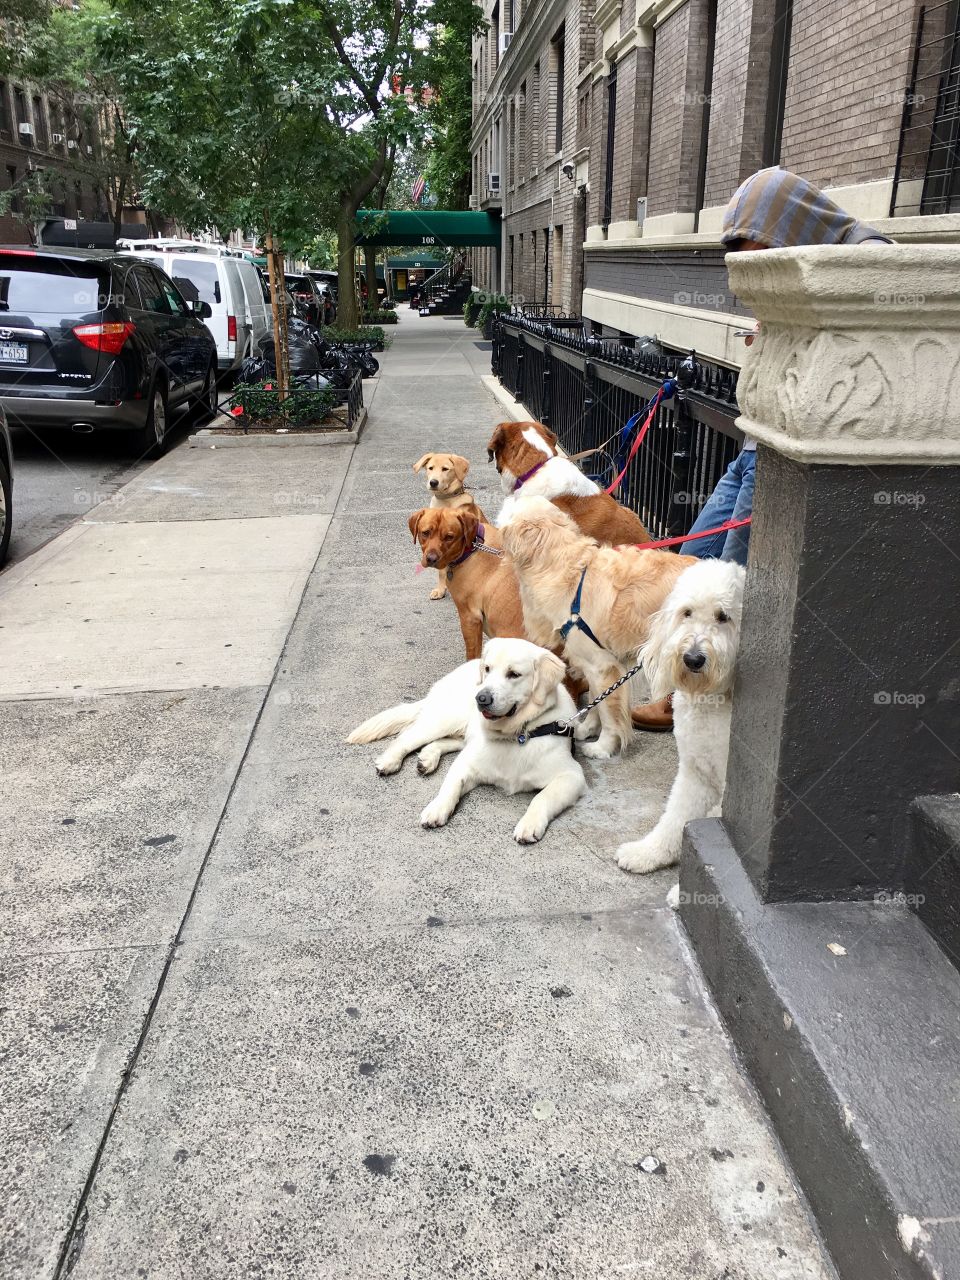 Dogs in NY